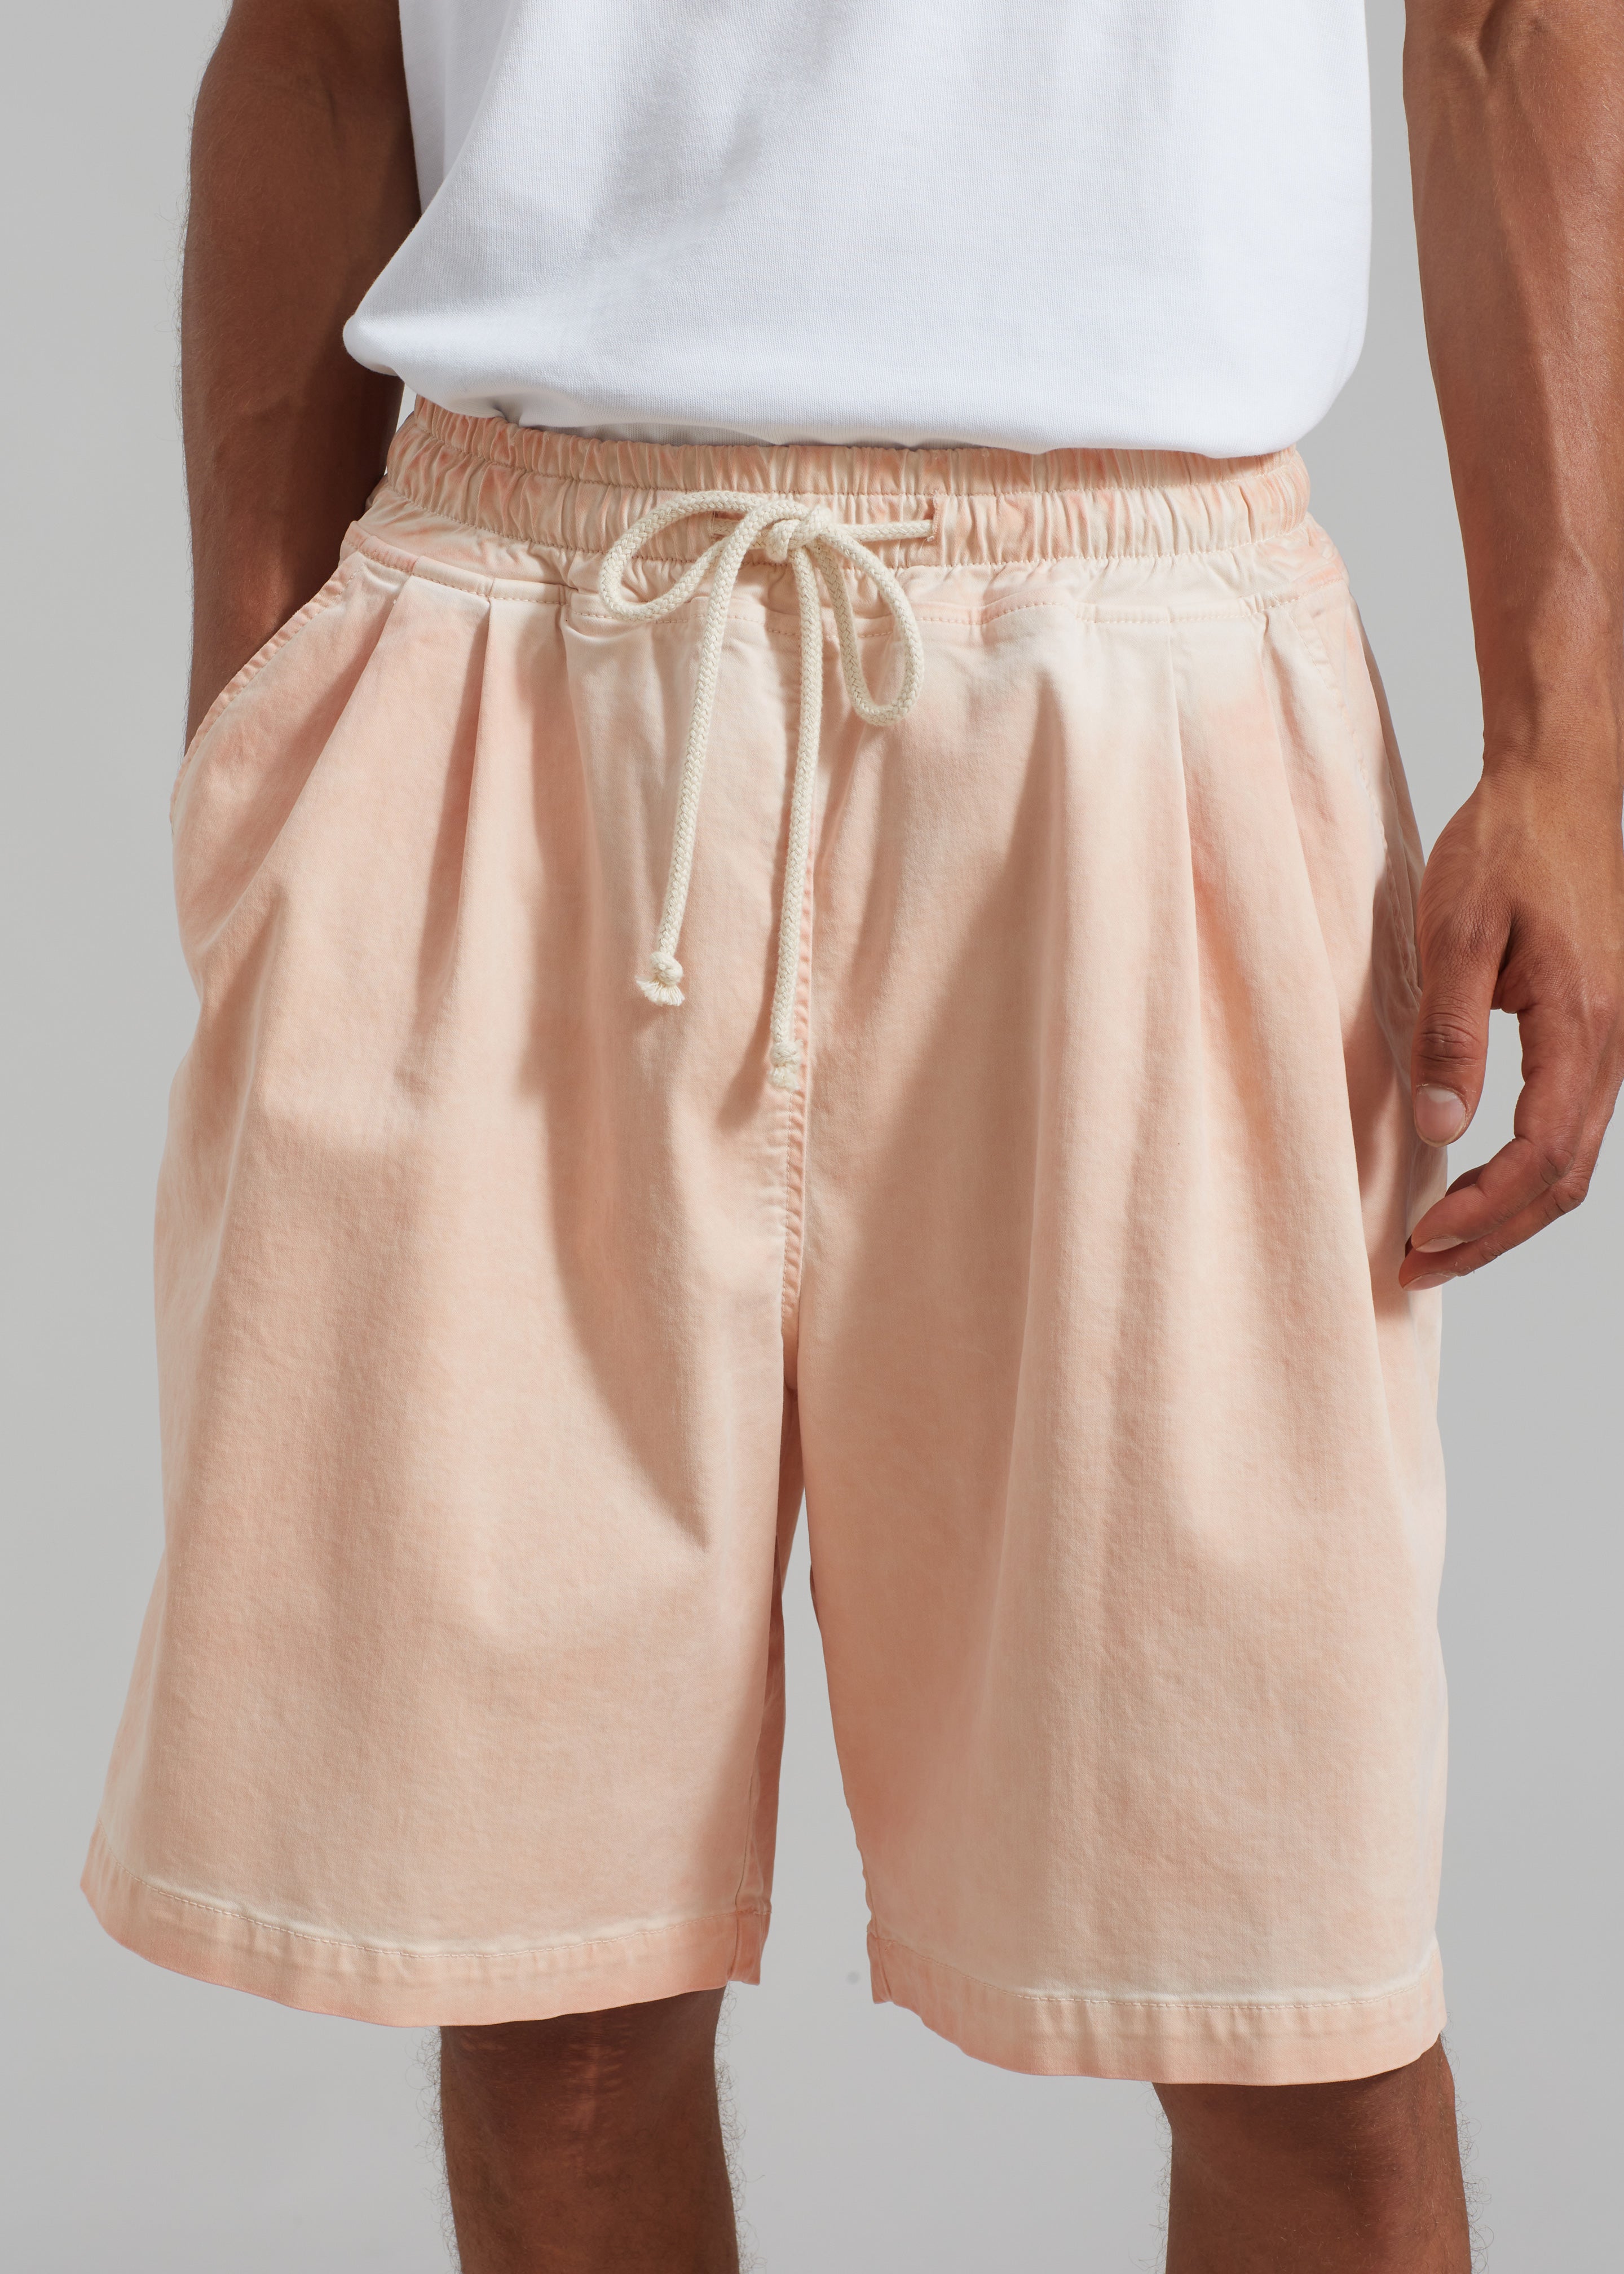 Pierce Shorts - Faded Pink - 3